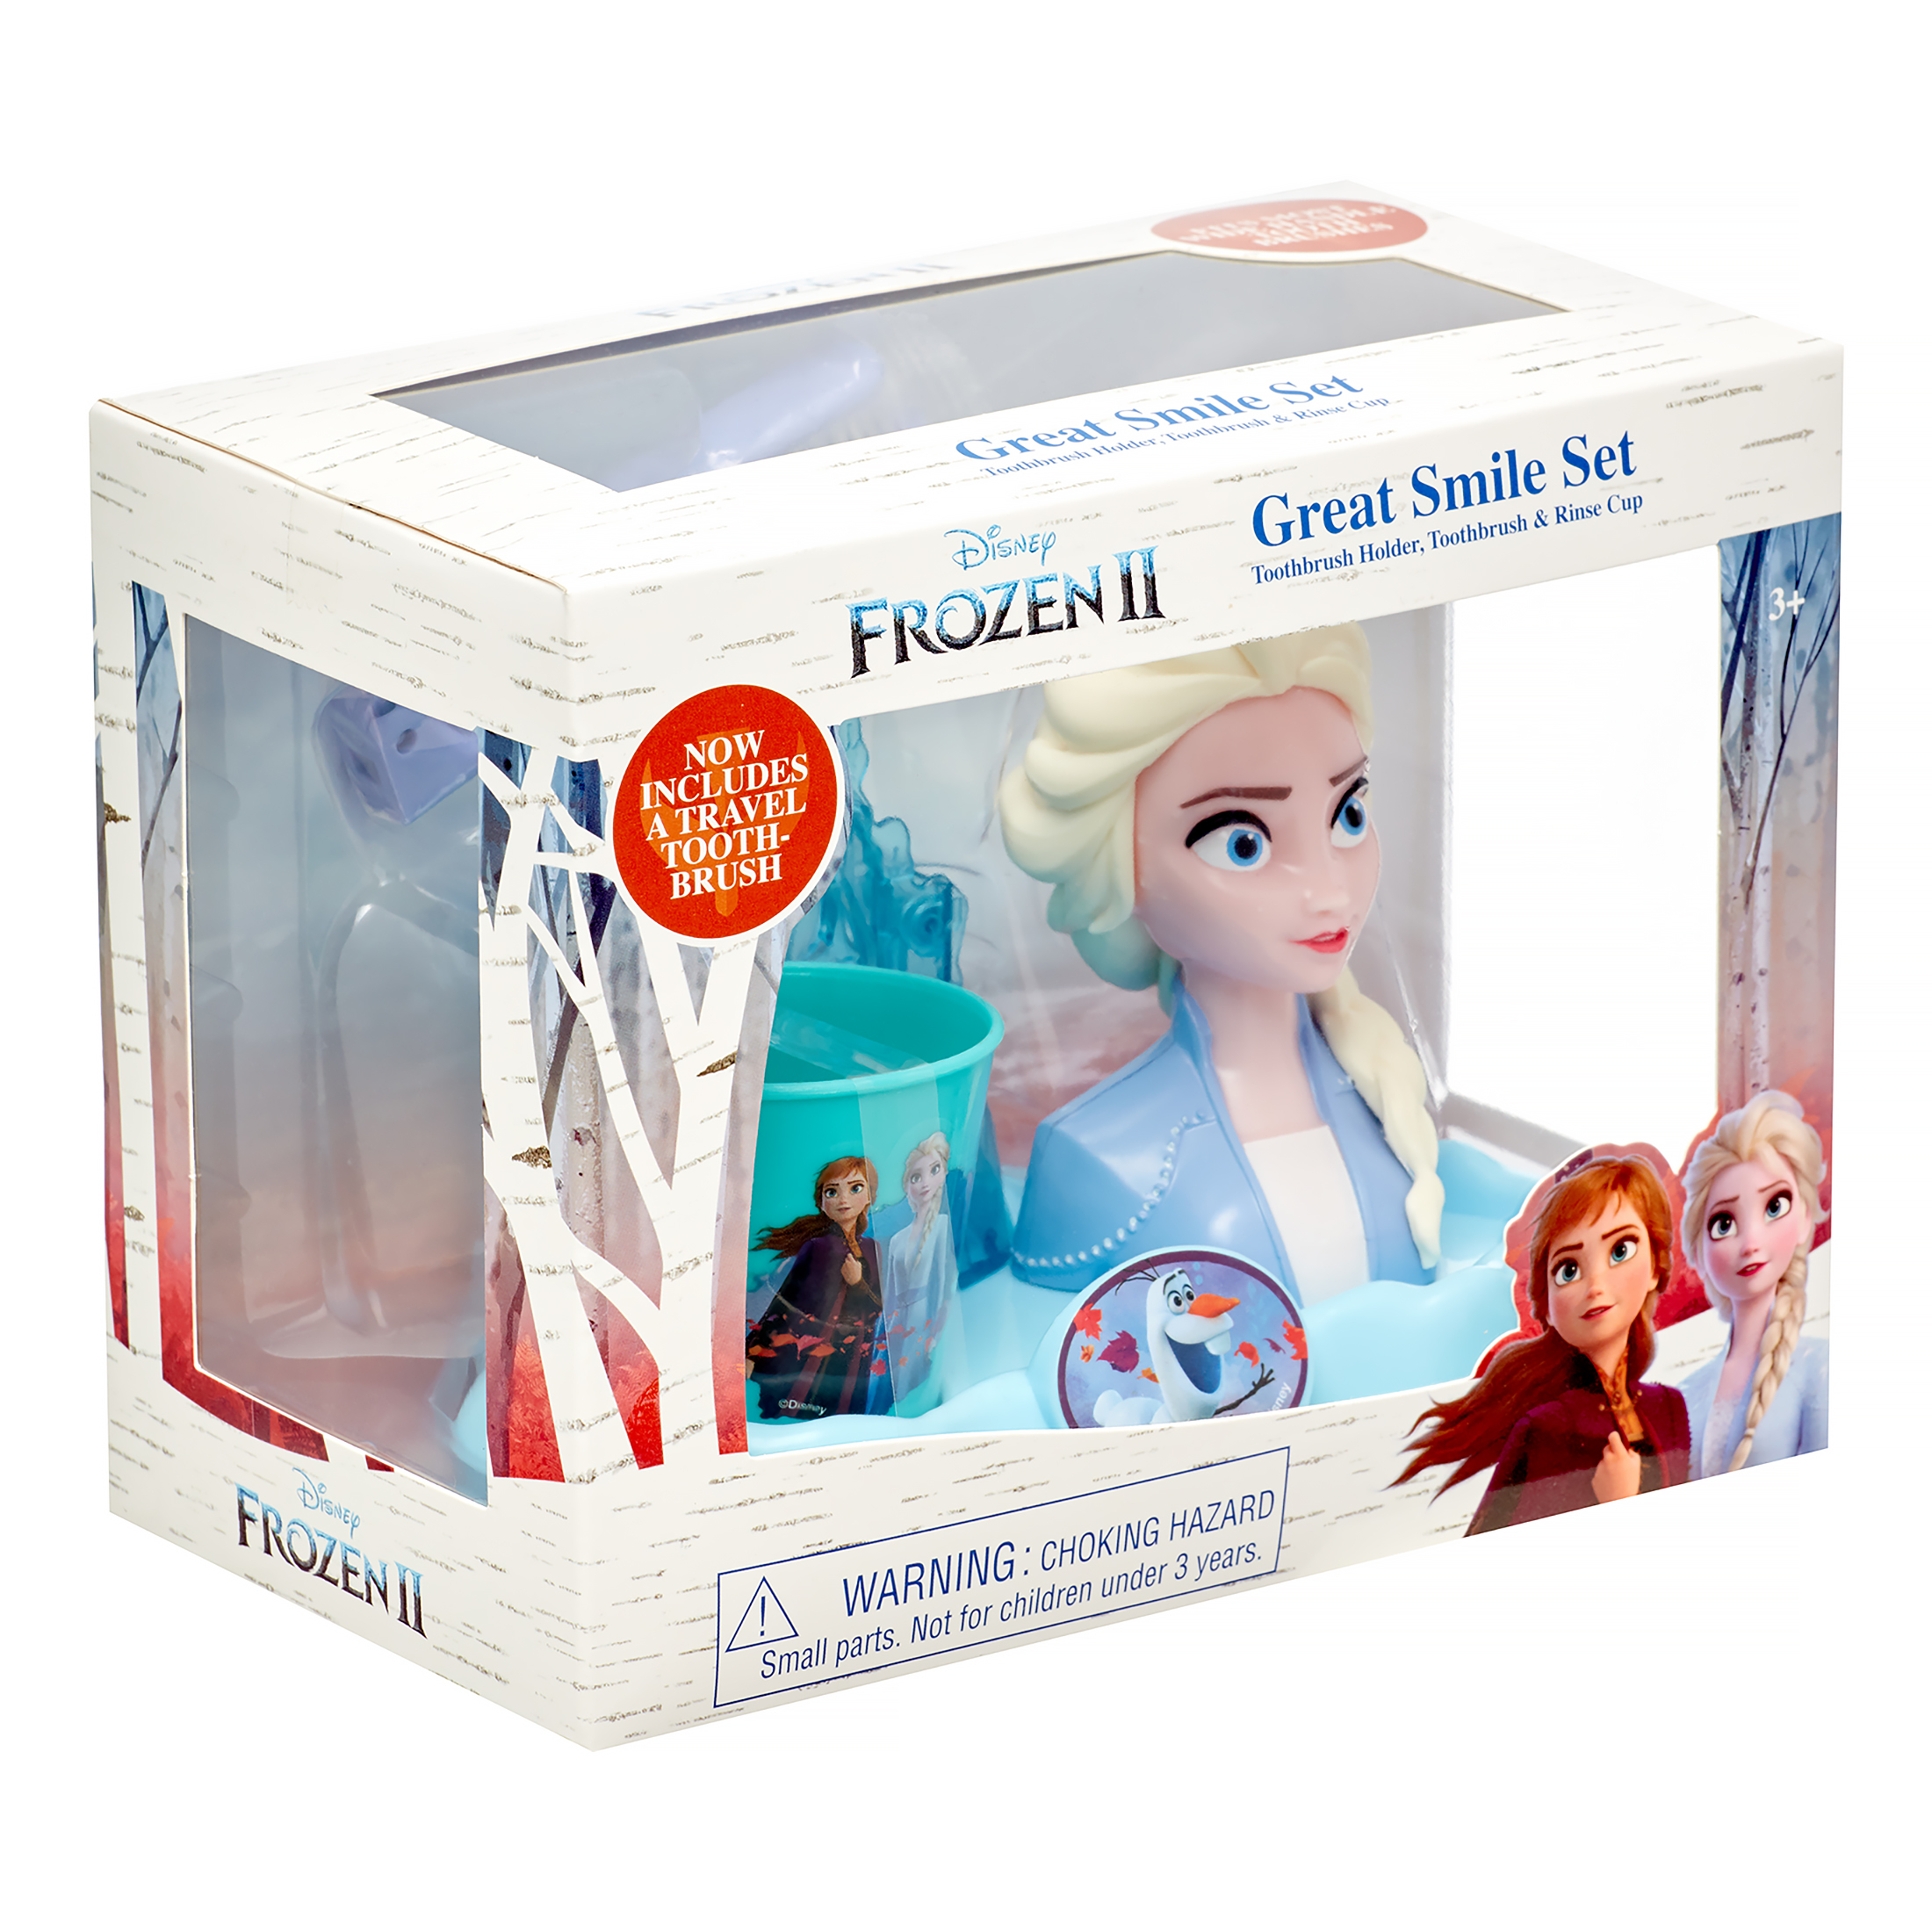 Disney Frozen II 3-Piece Great Smile Elsa Toothbrush and Holder Set - image 2 of 6